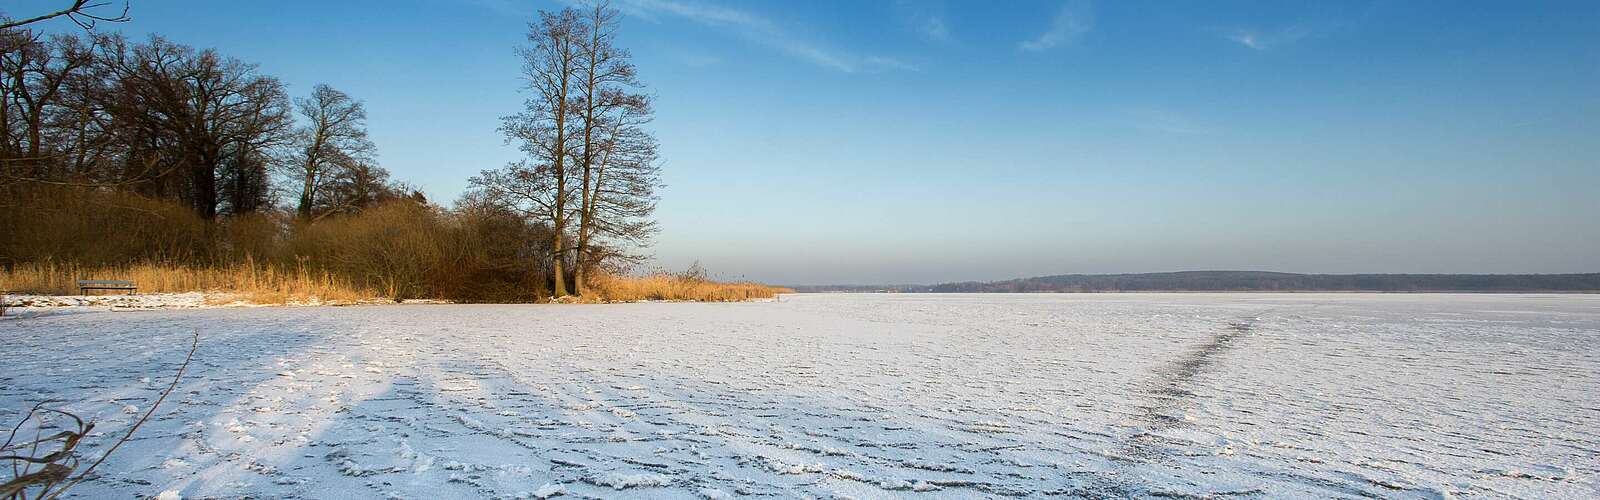 Winter im Havelland,
        
    

        Foto: TMB-Fotoarchiv/Yorck Maecke